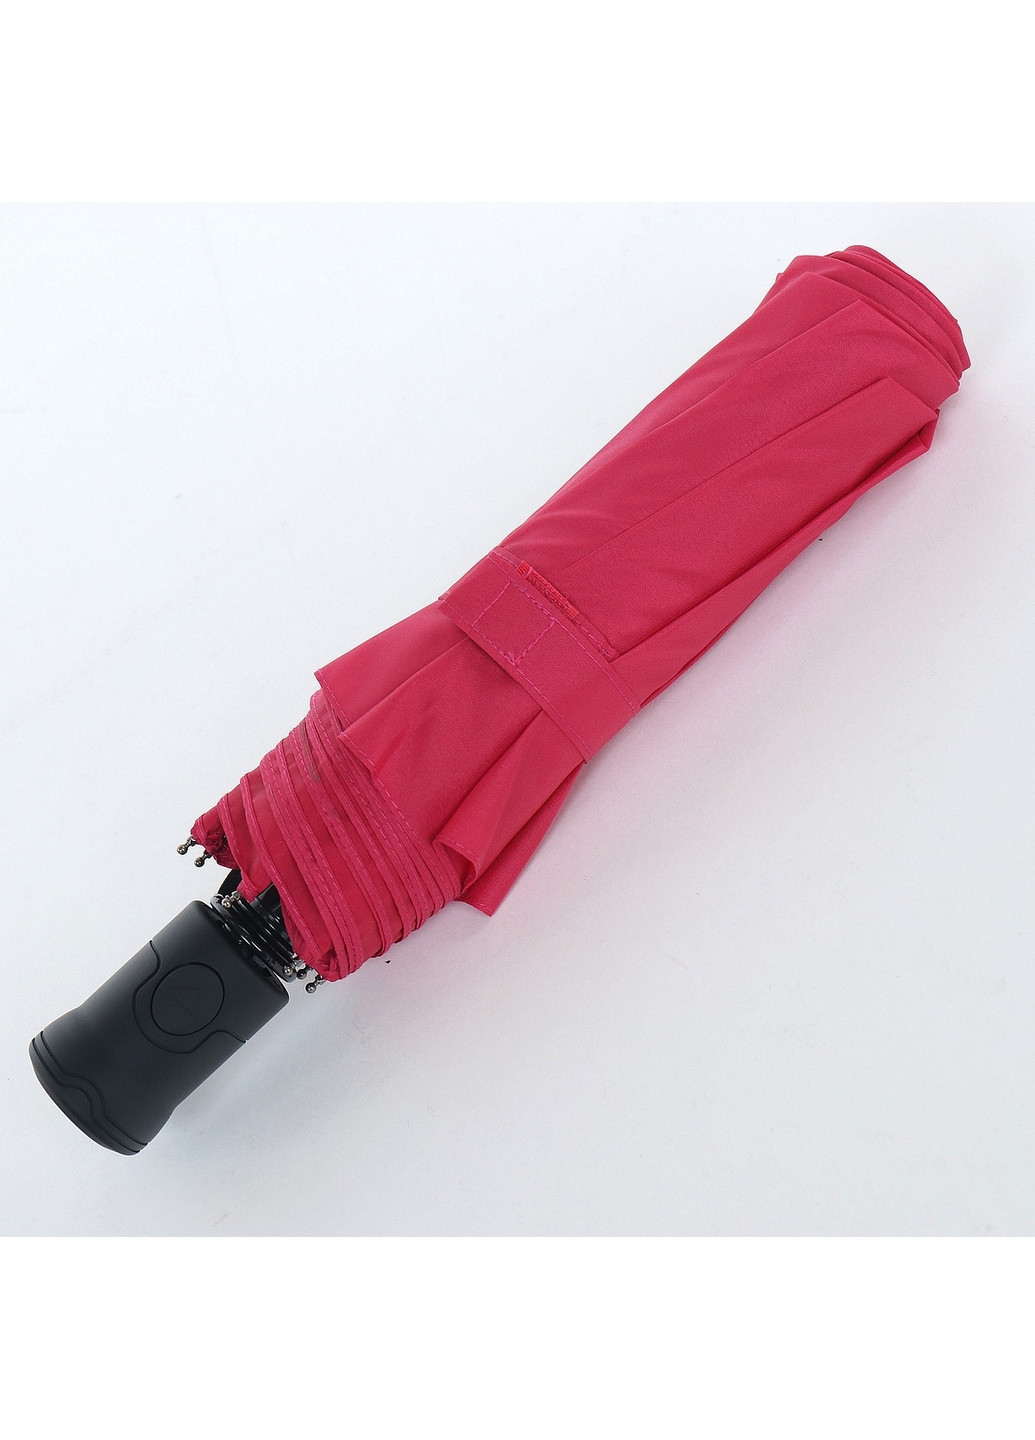 Жіноча складна парасоля напівавтомат 98 см ArtRain (260330843)